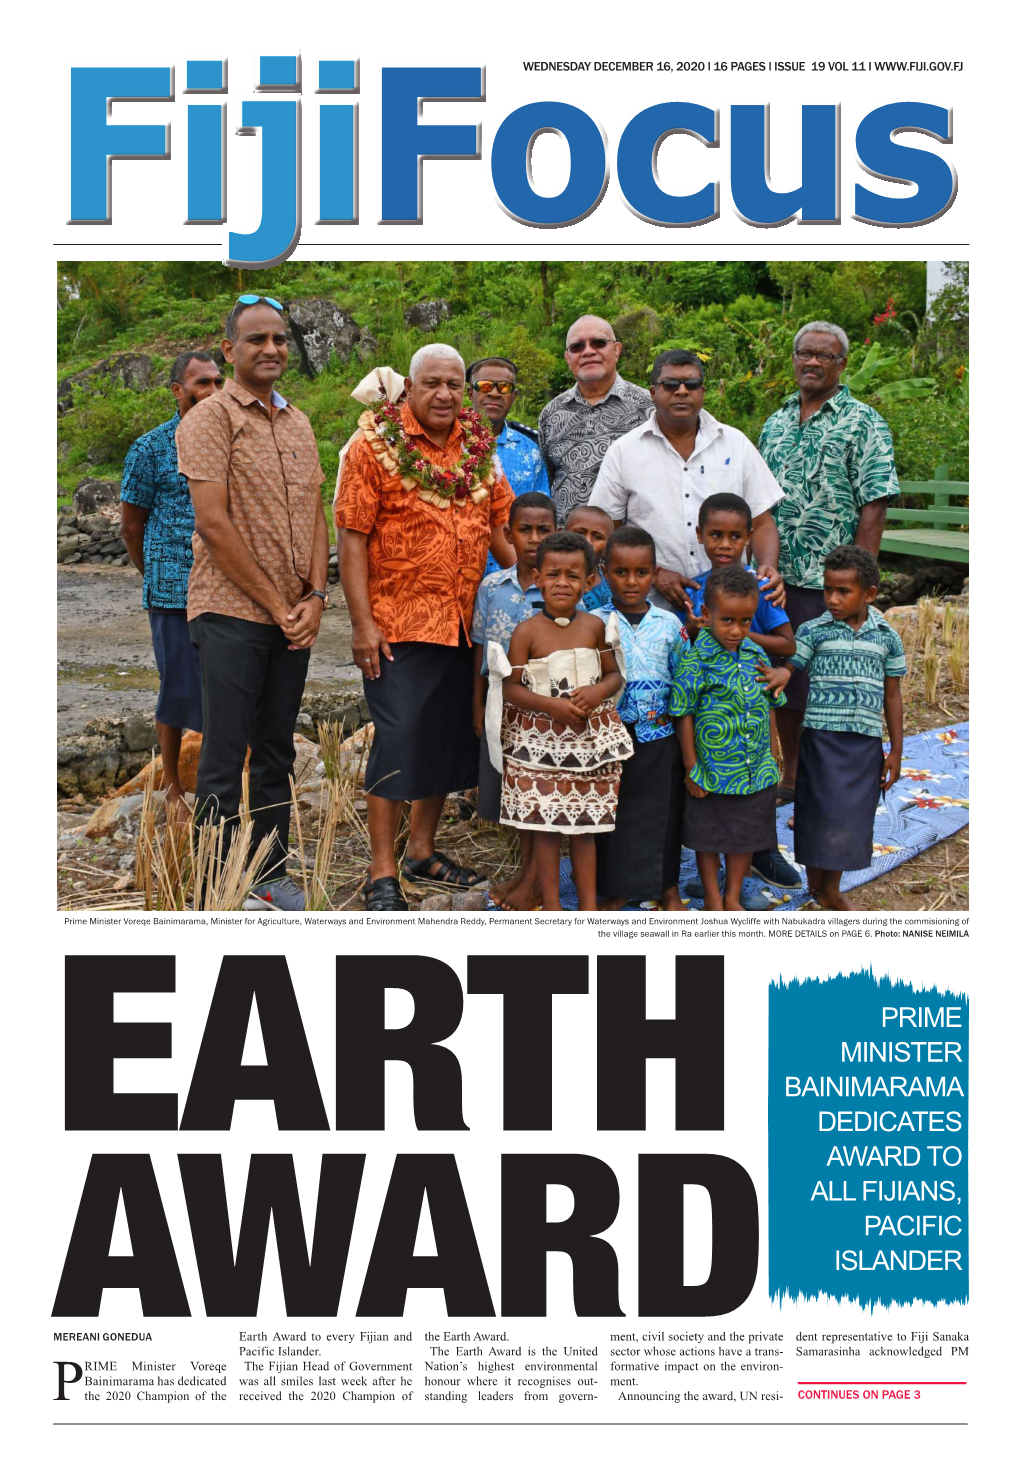 Prime Minister Bainimarama Dedicates Award to All Fijians, Pacific Islander